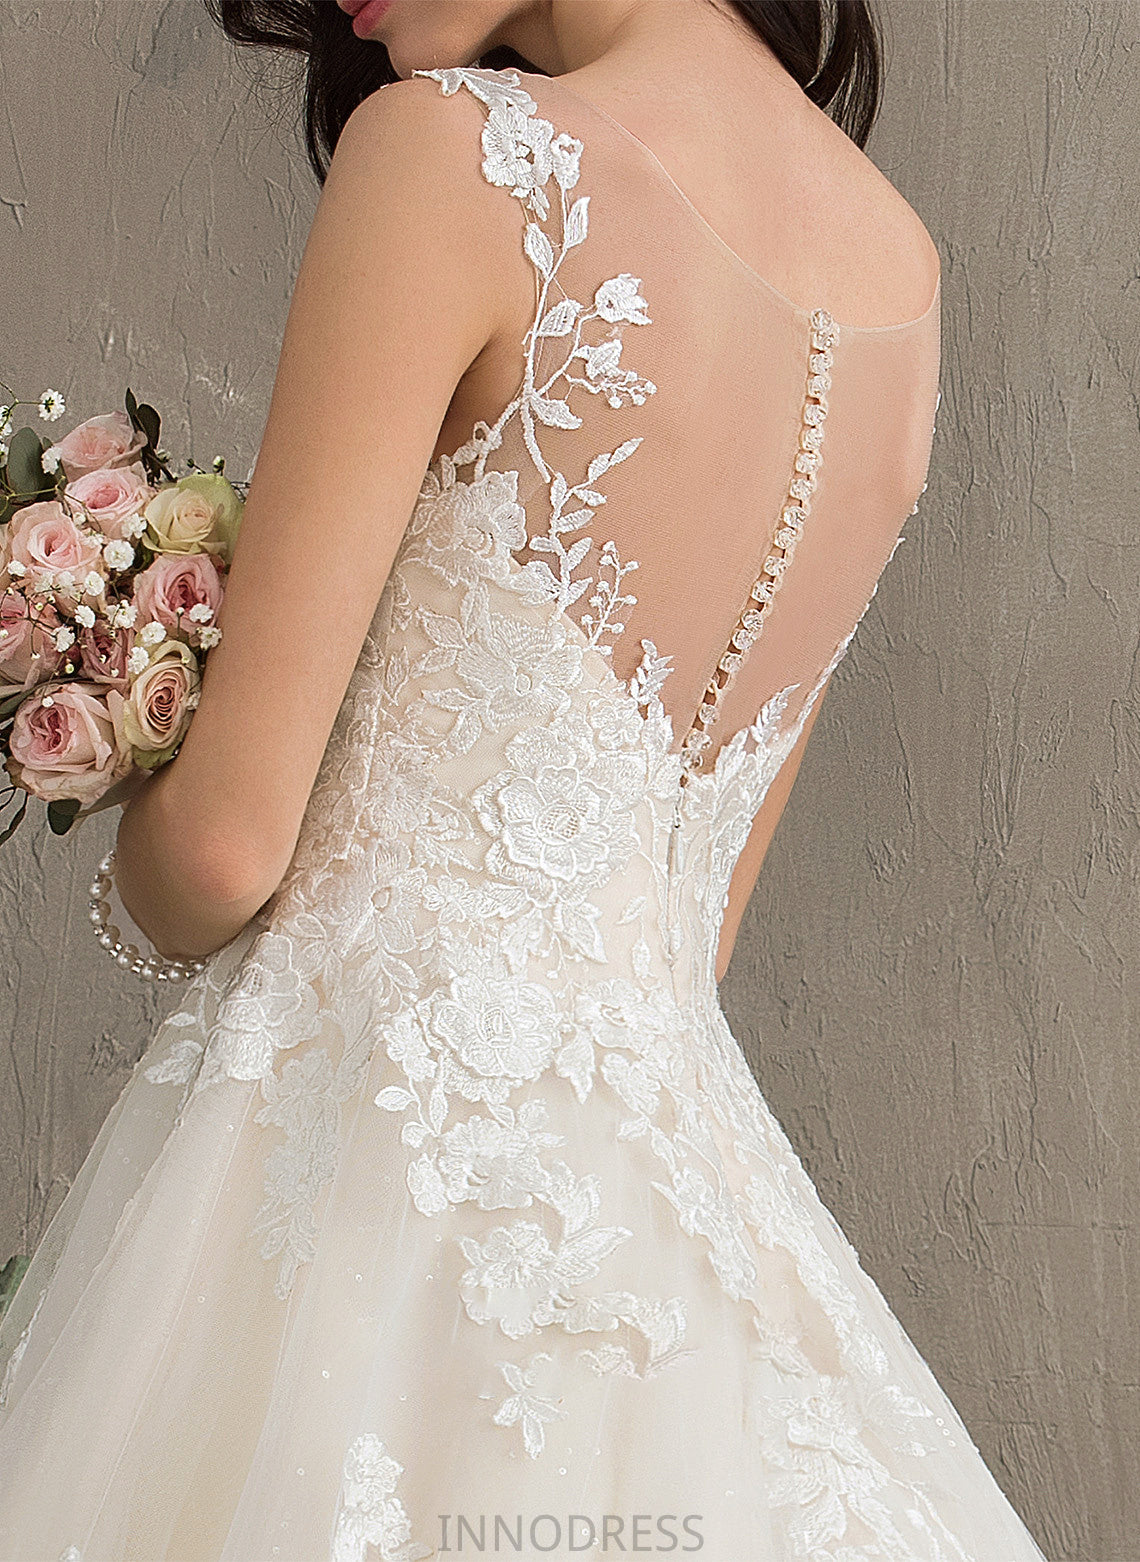 Court Eleanor Wedding Dresses Ball-Gown/Princess Illusion Wedding Train Dress Tulle